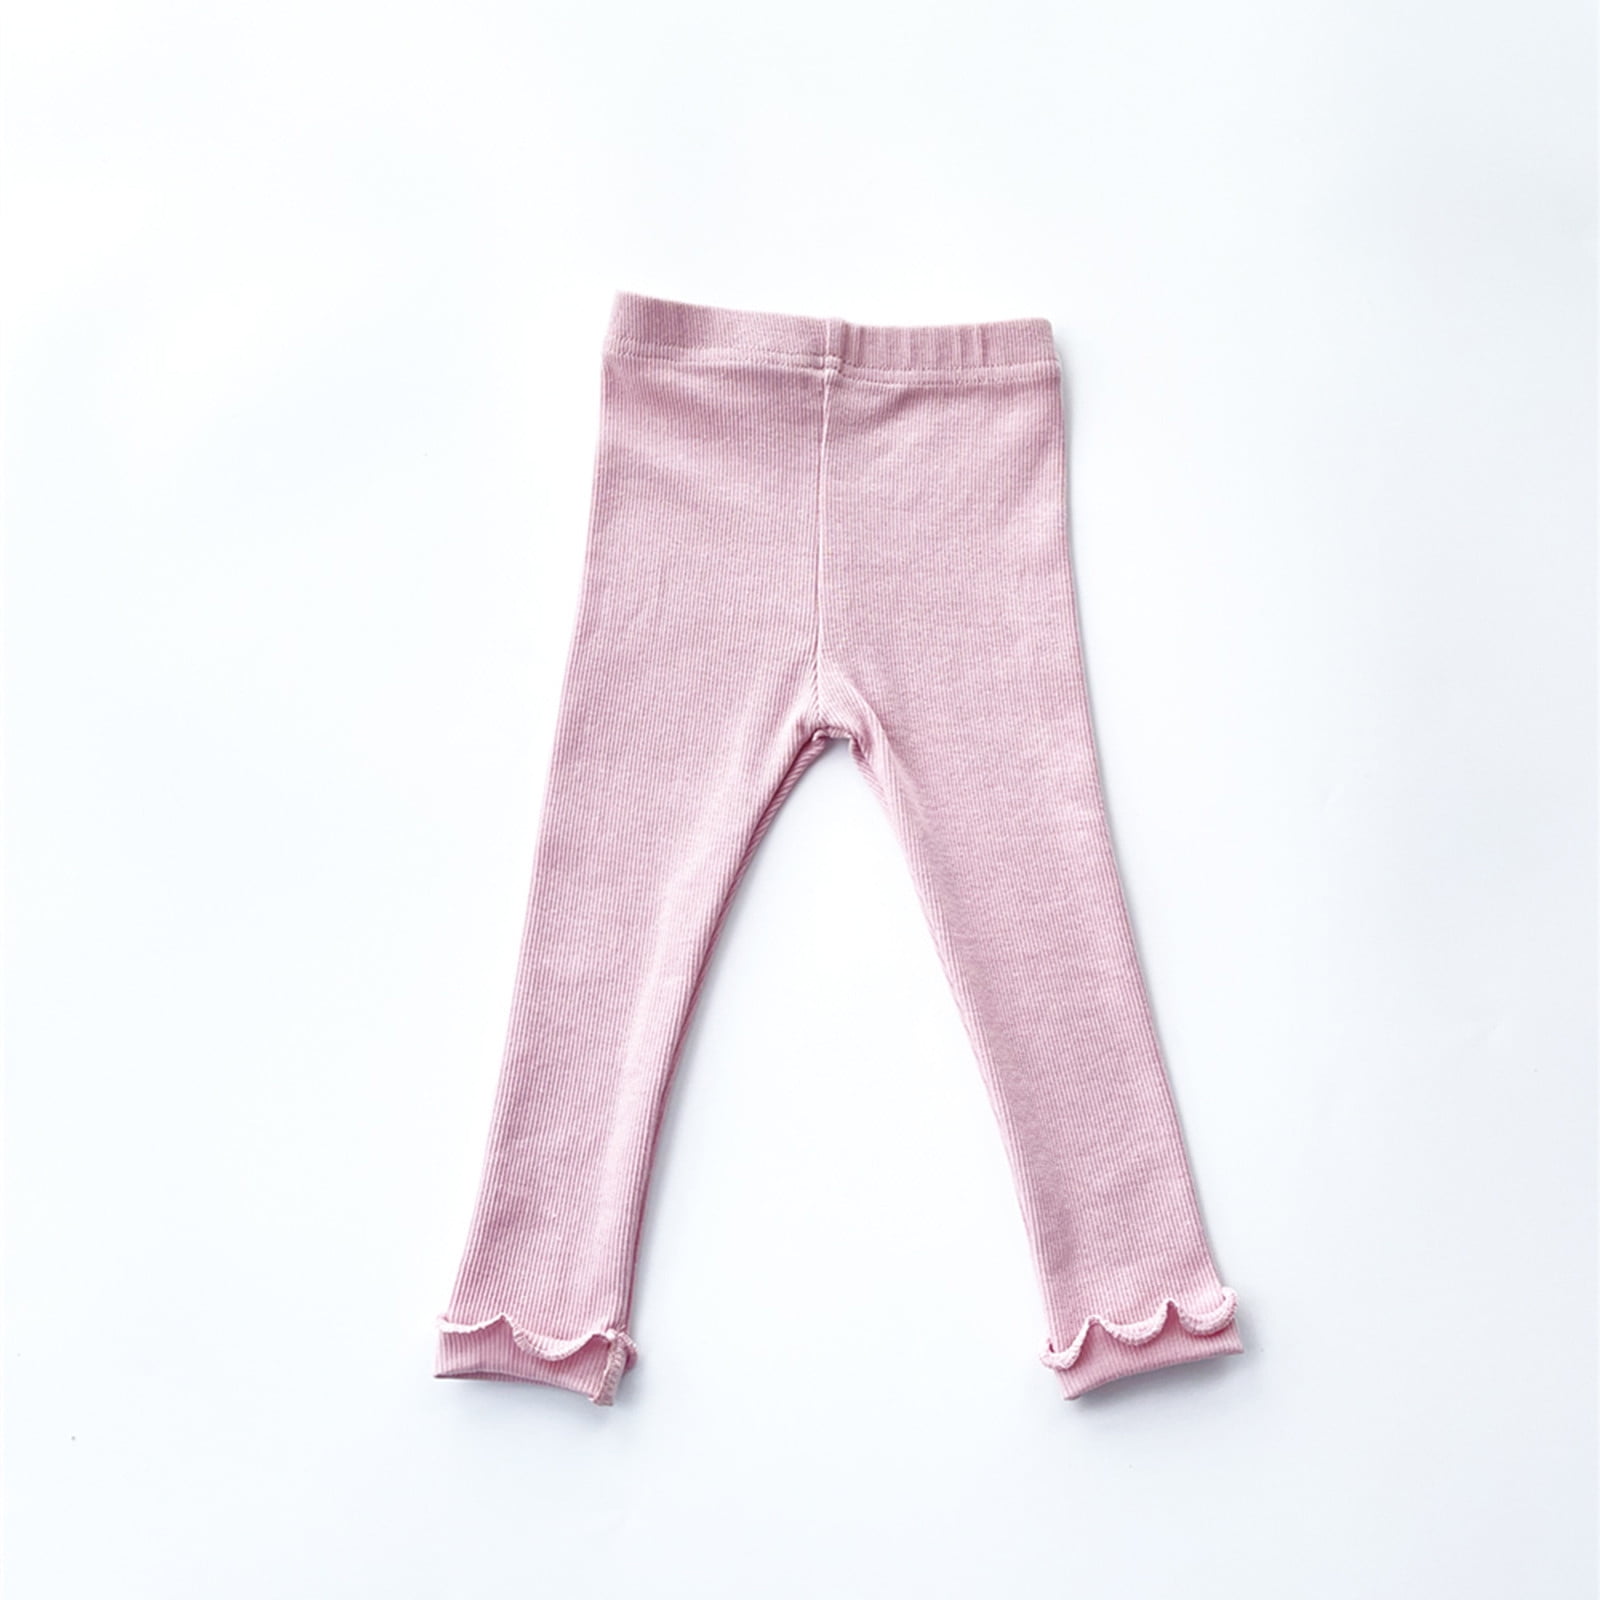 Akiihool Teen Girl Pants for School Girls' School Uniform Jogger Pants  Twill Chino Pants Long (Grey,6-12 Months)